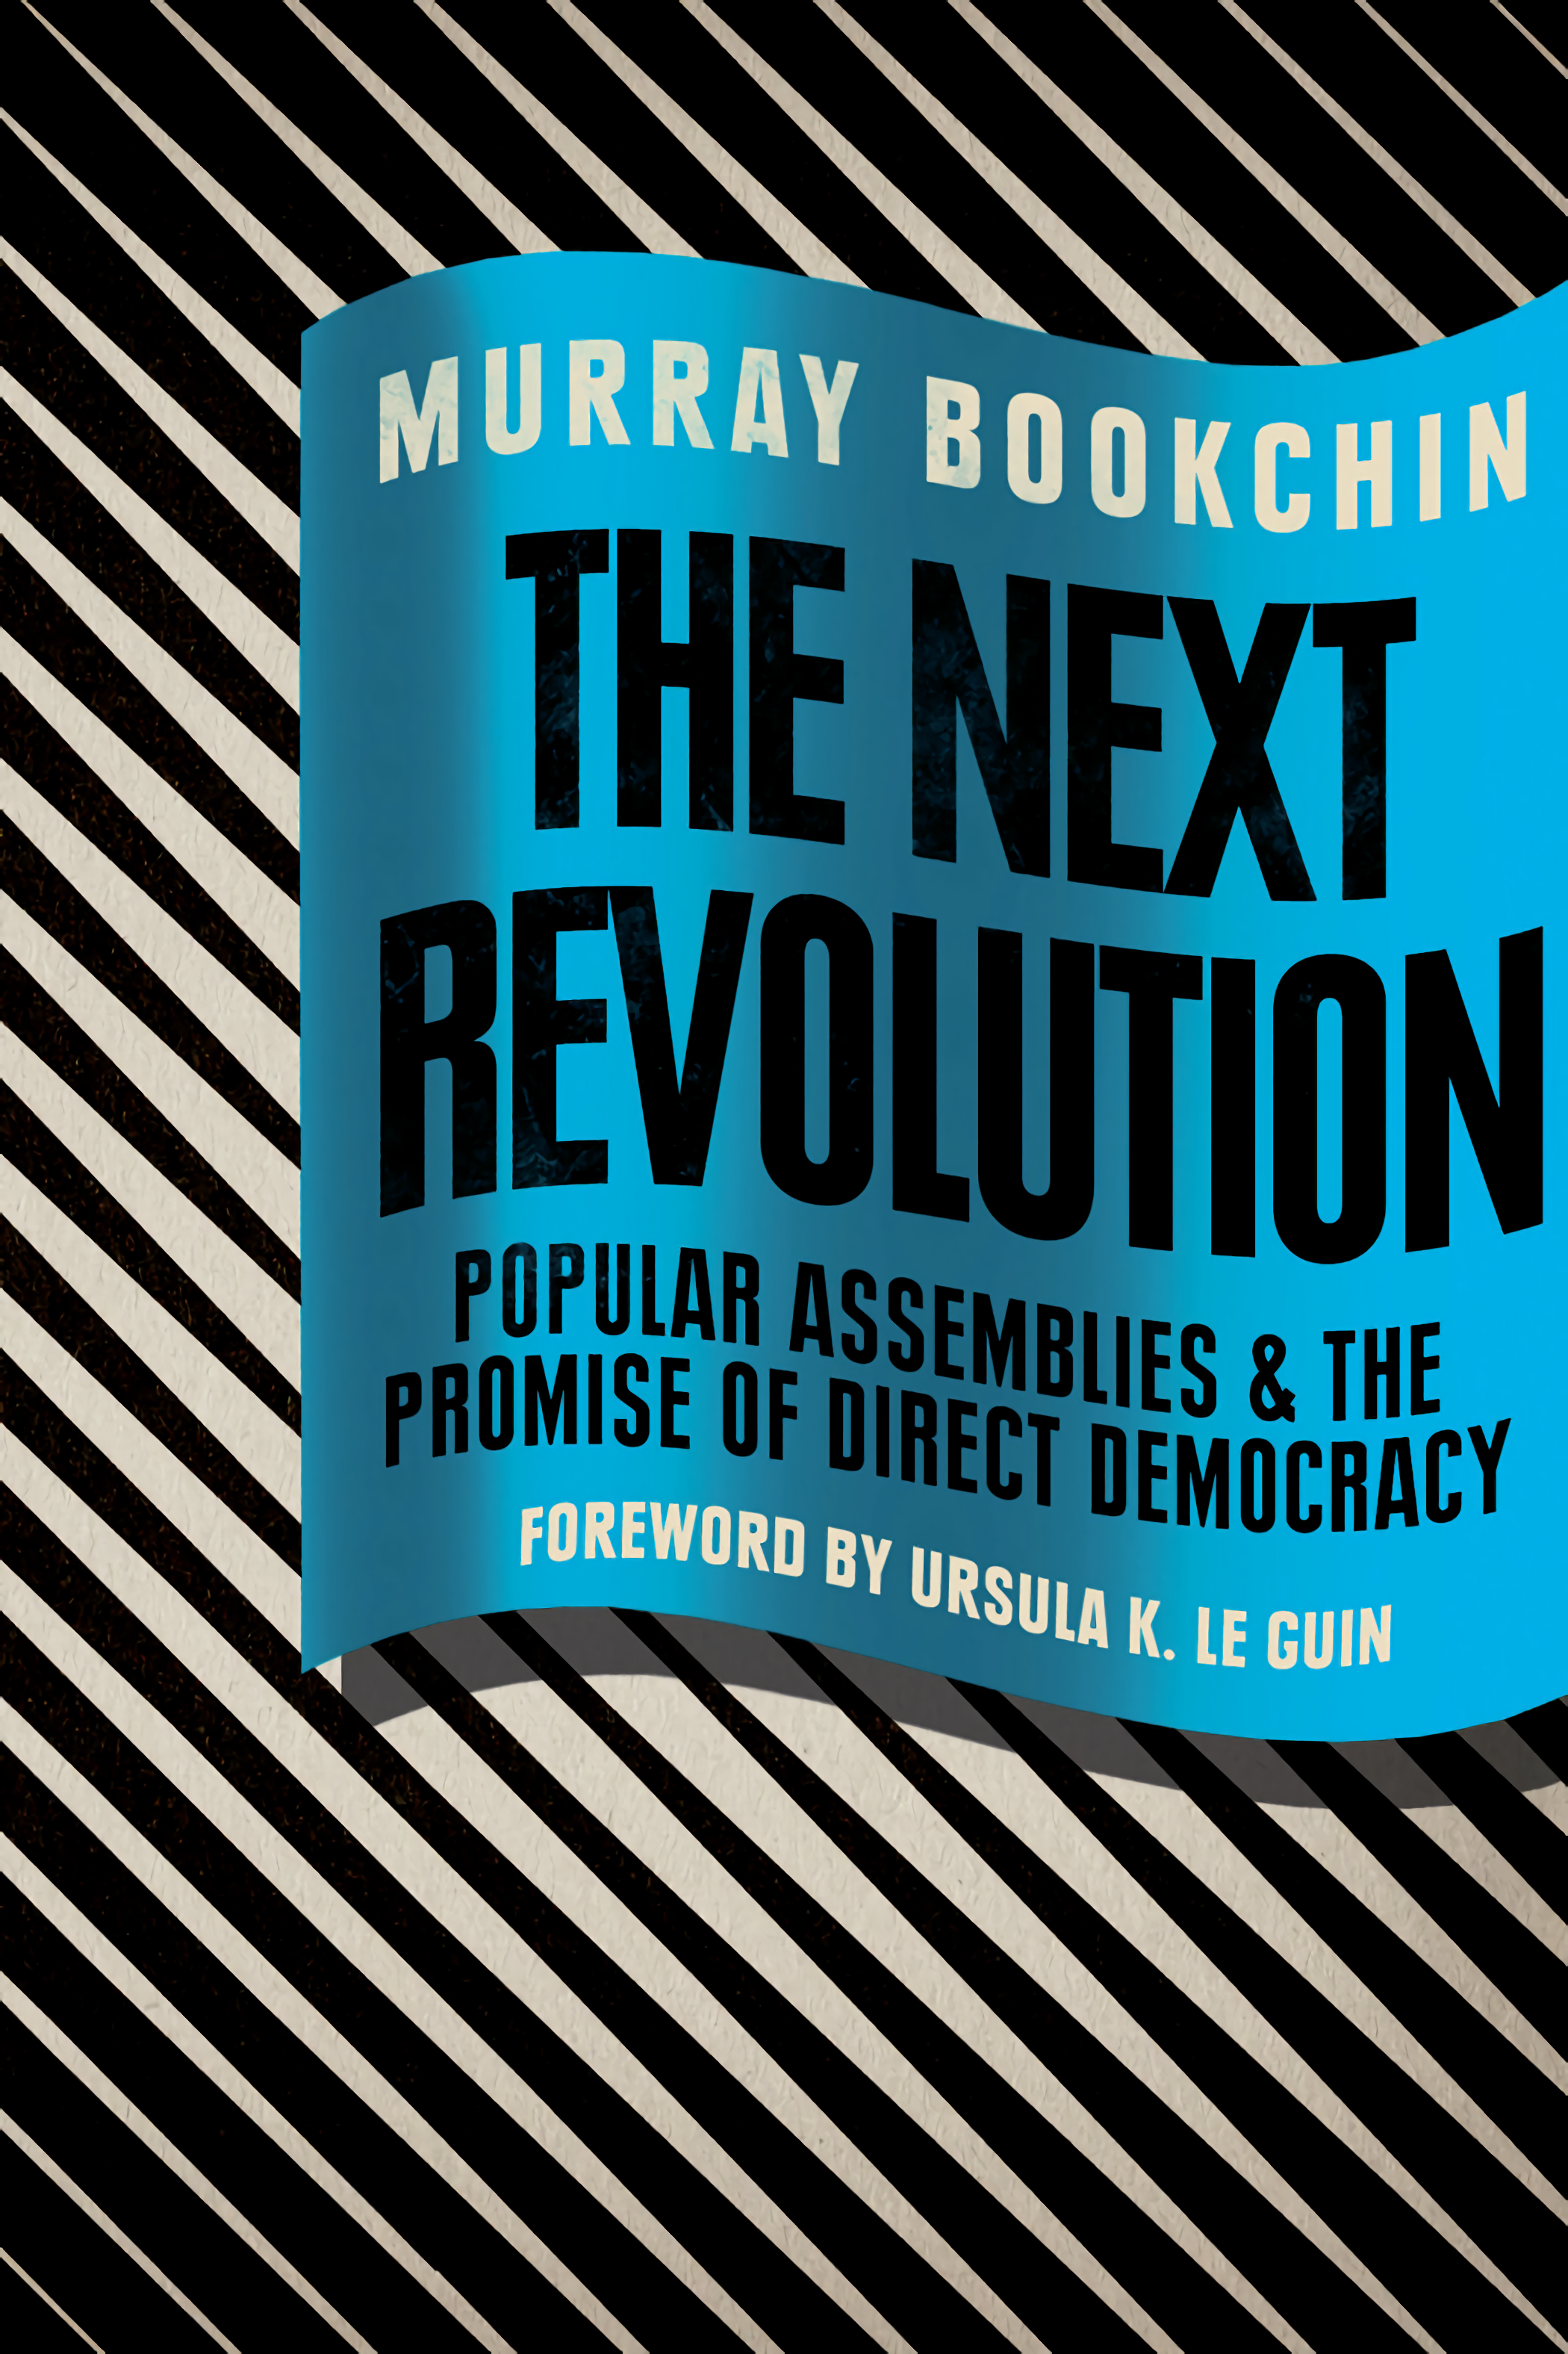 m-b-murray-bookchin-next-revolution-1.png